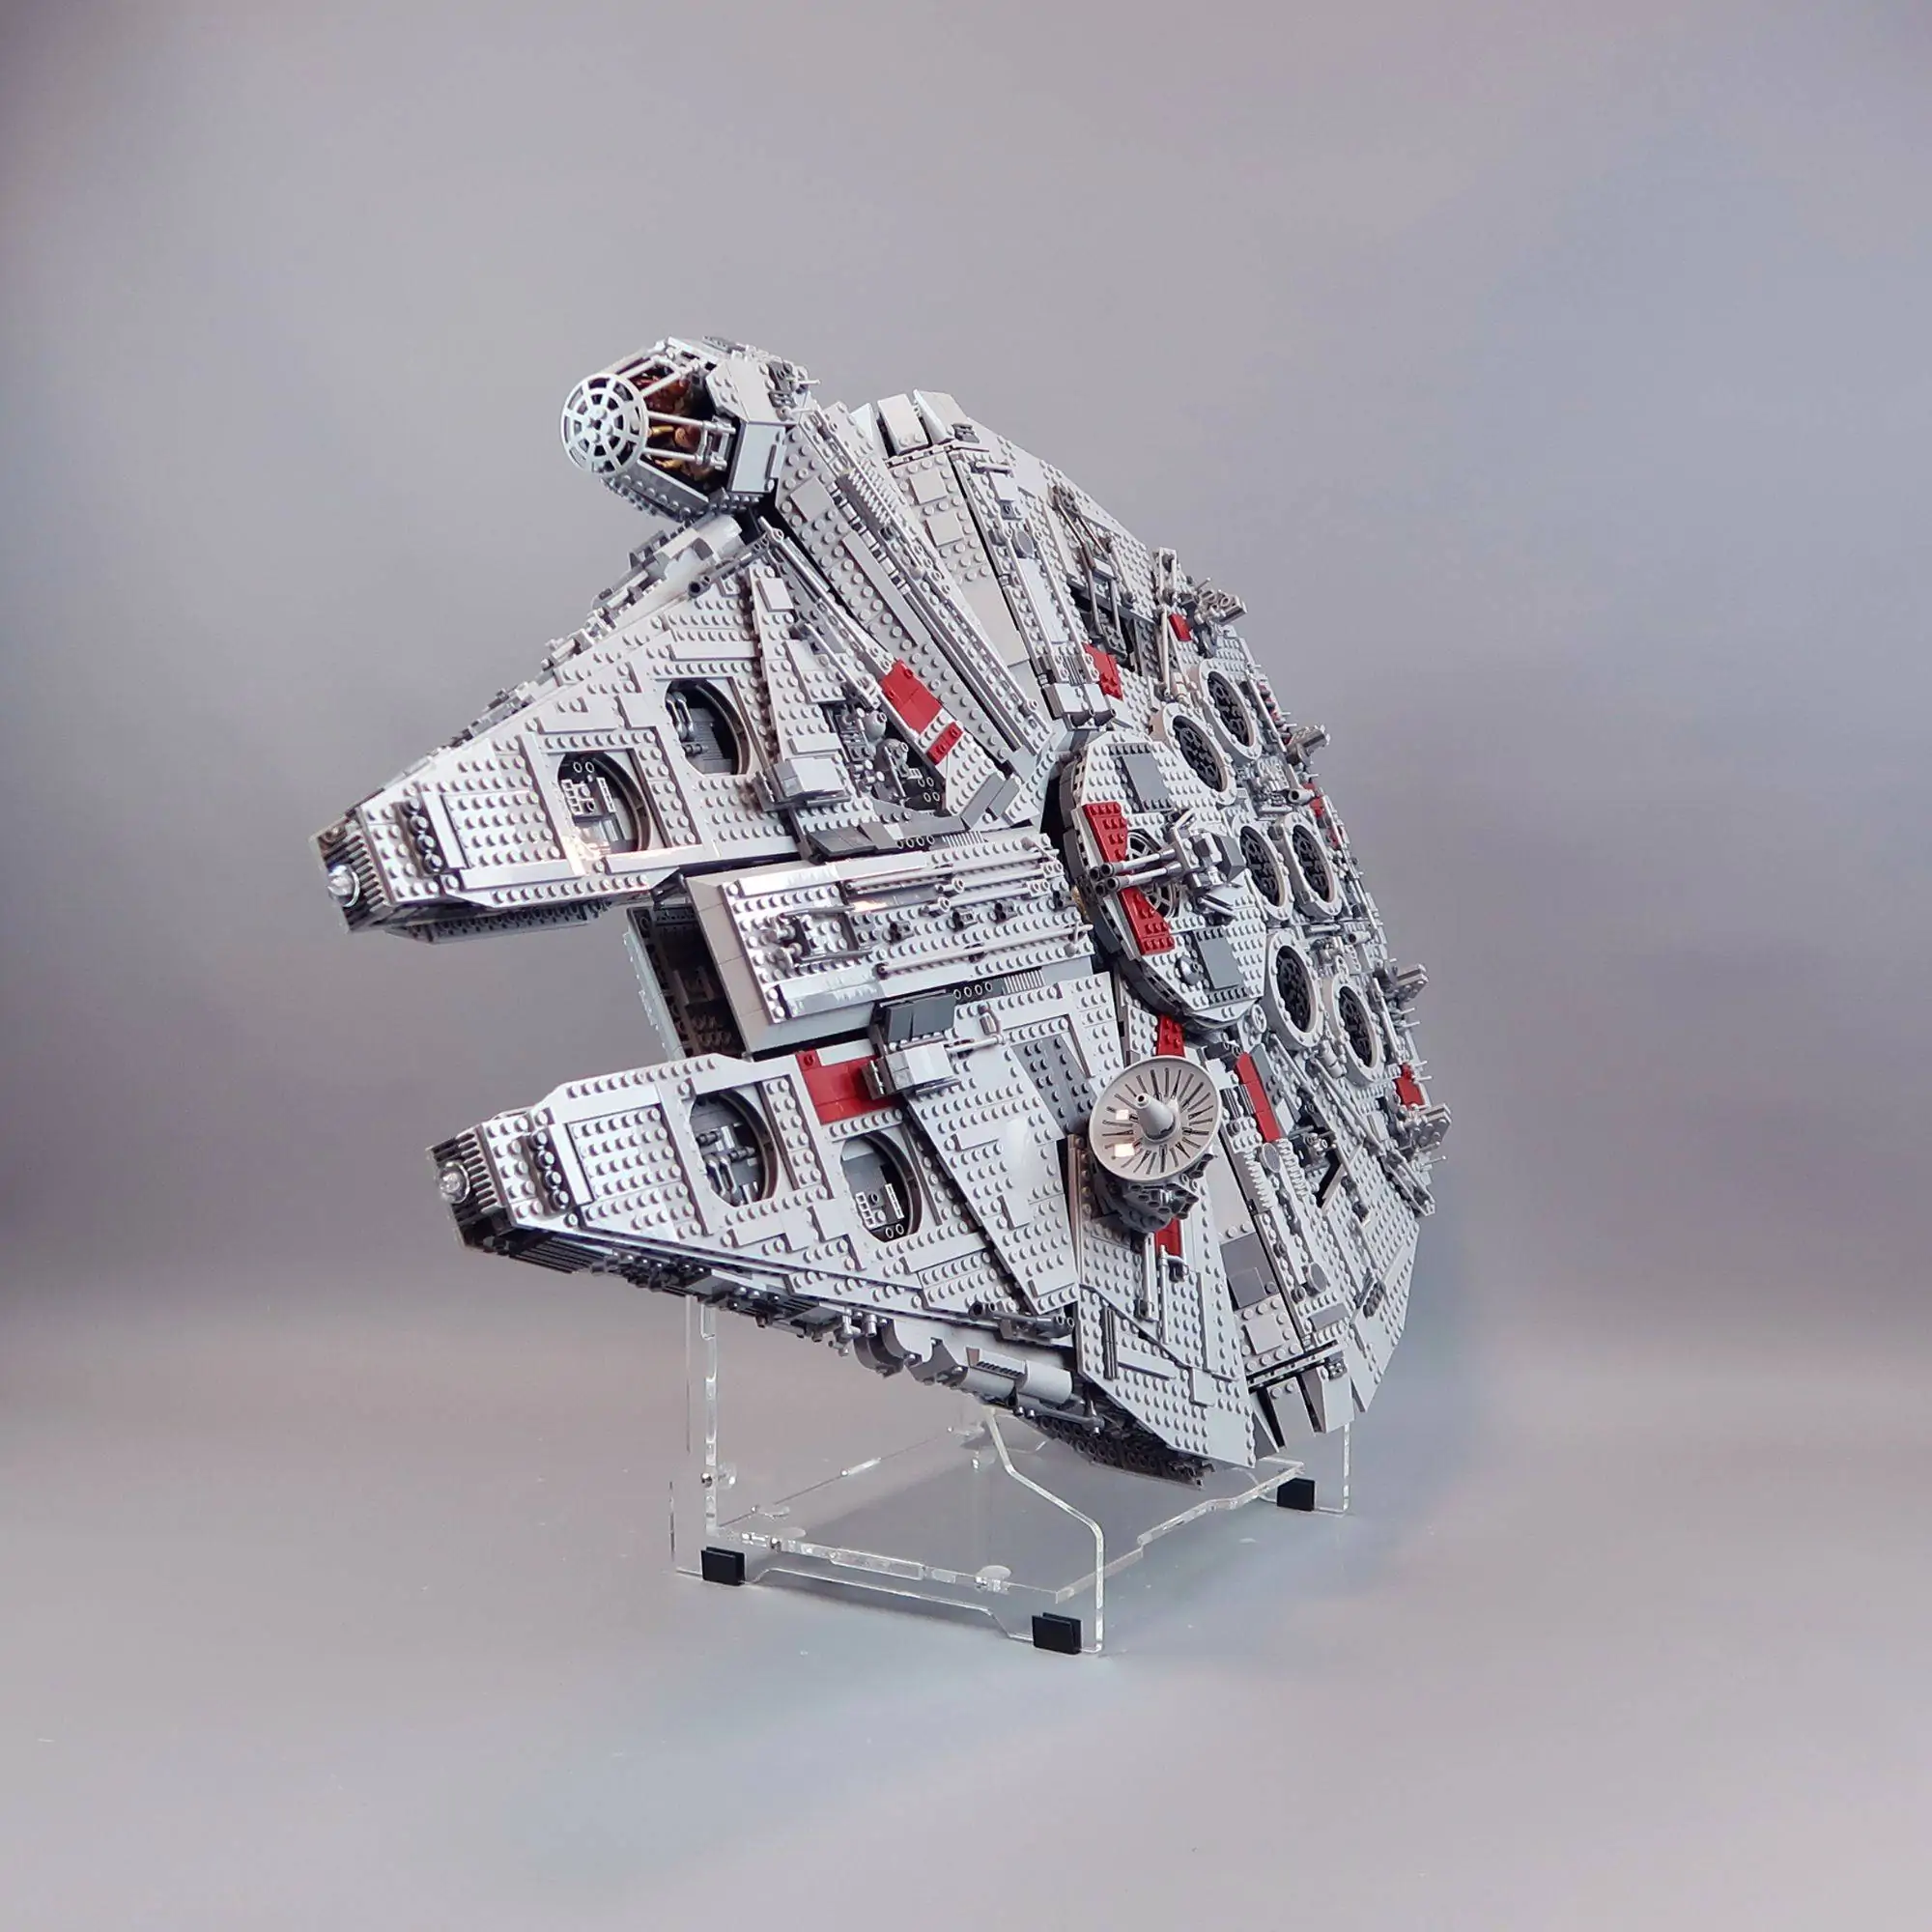 Acrylic Display for LEGO 10179 Millennium Falcon | iDisplayit